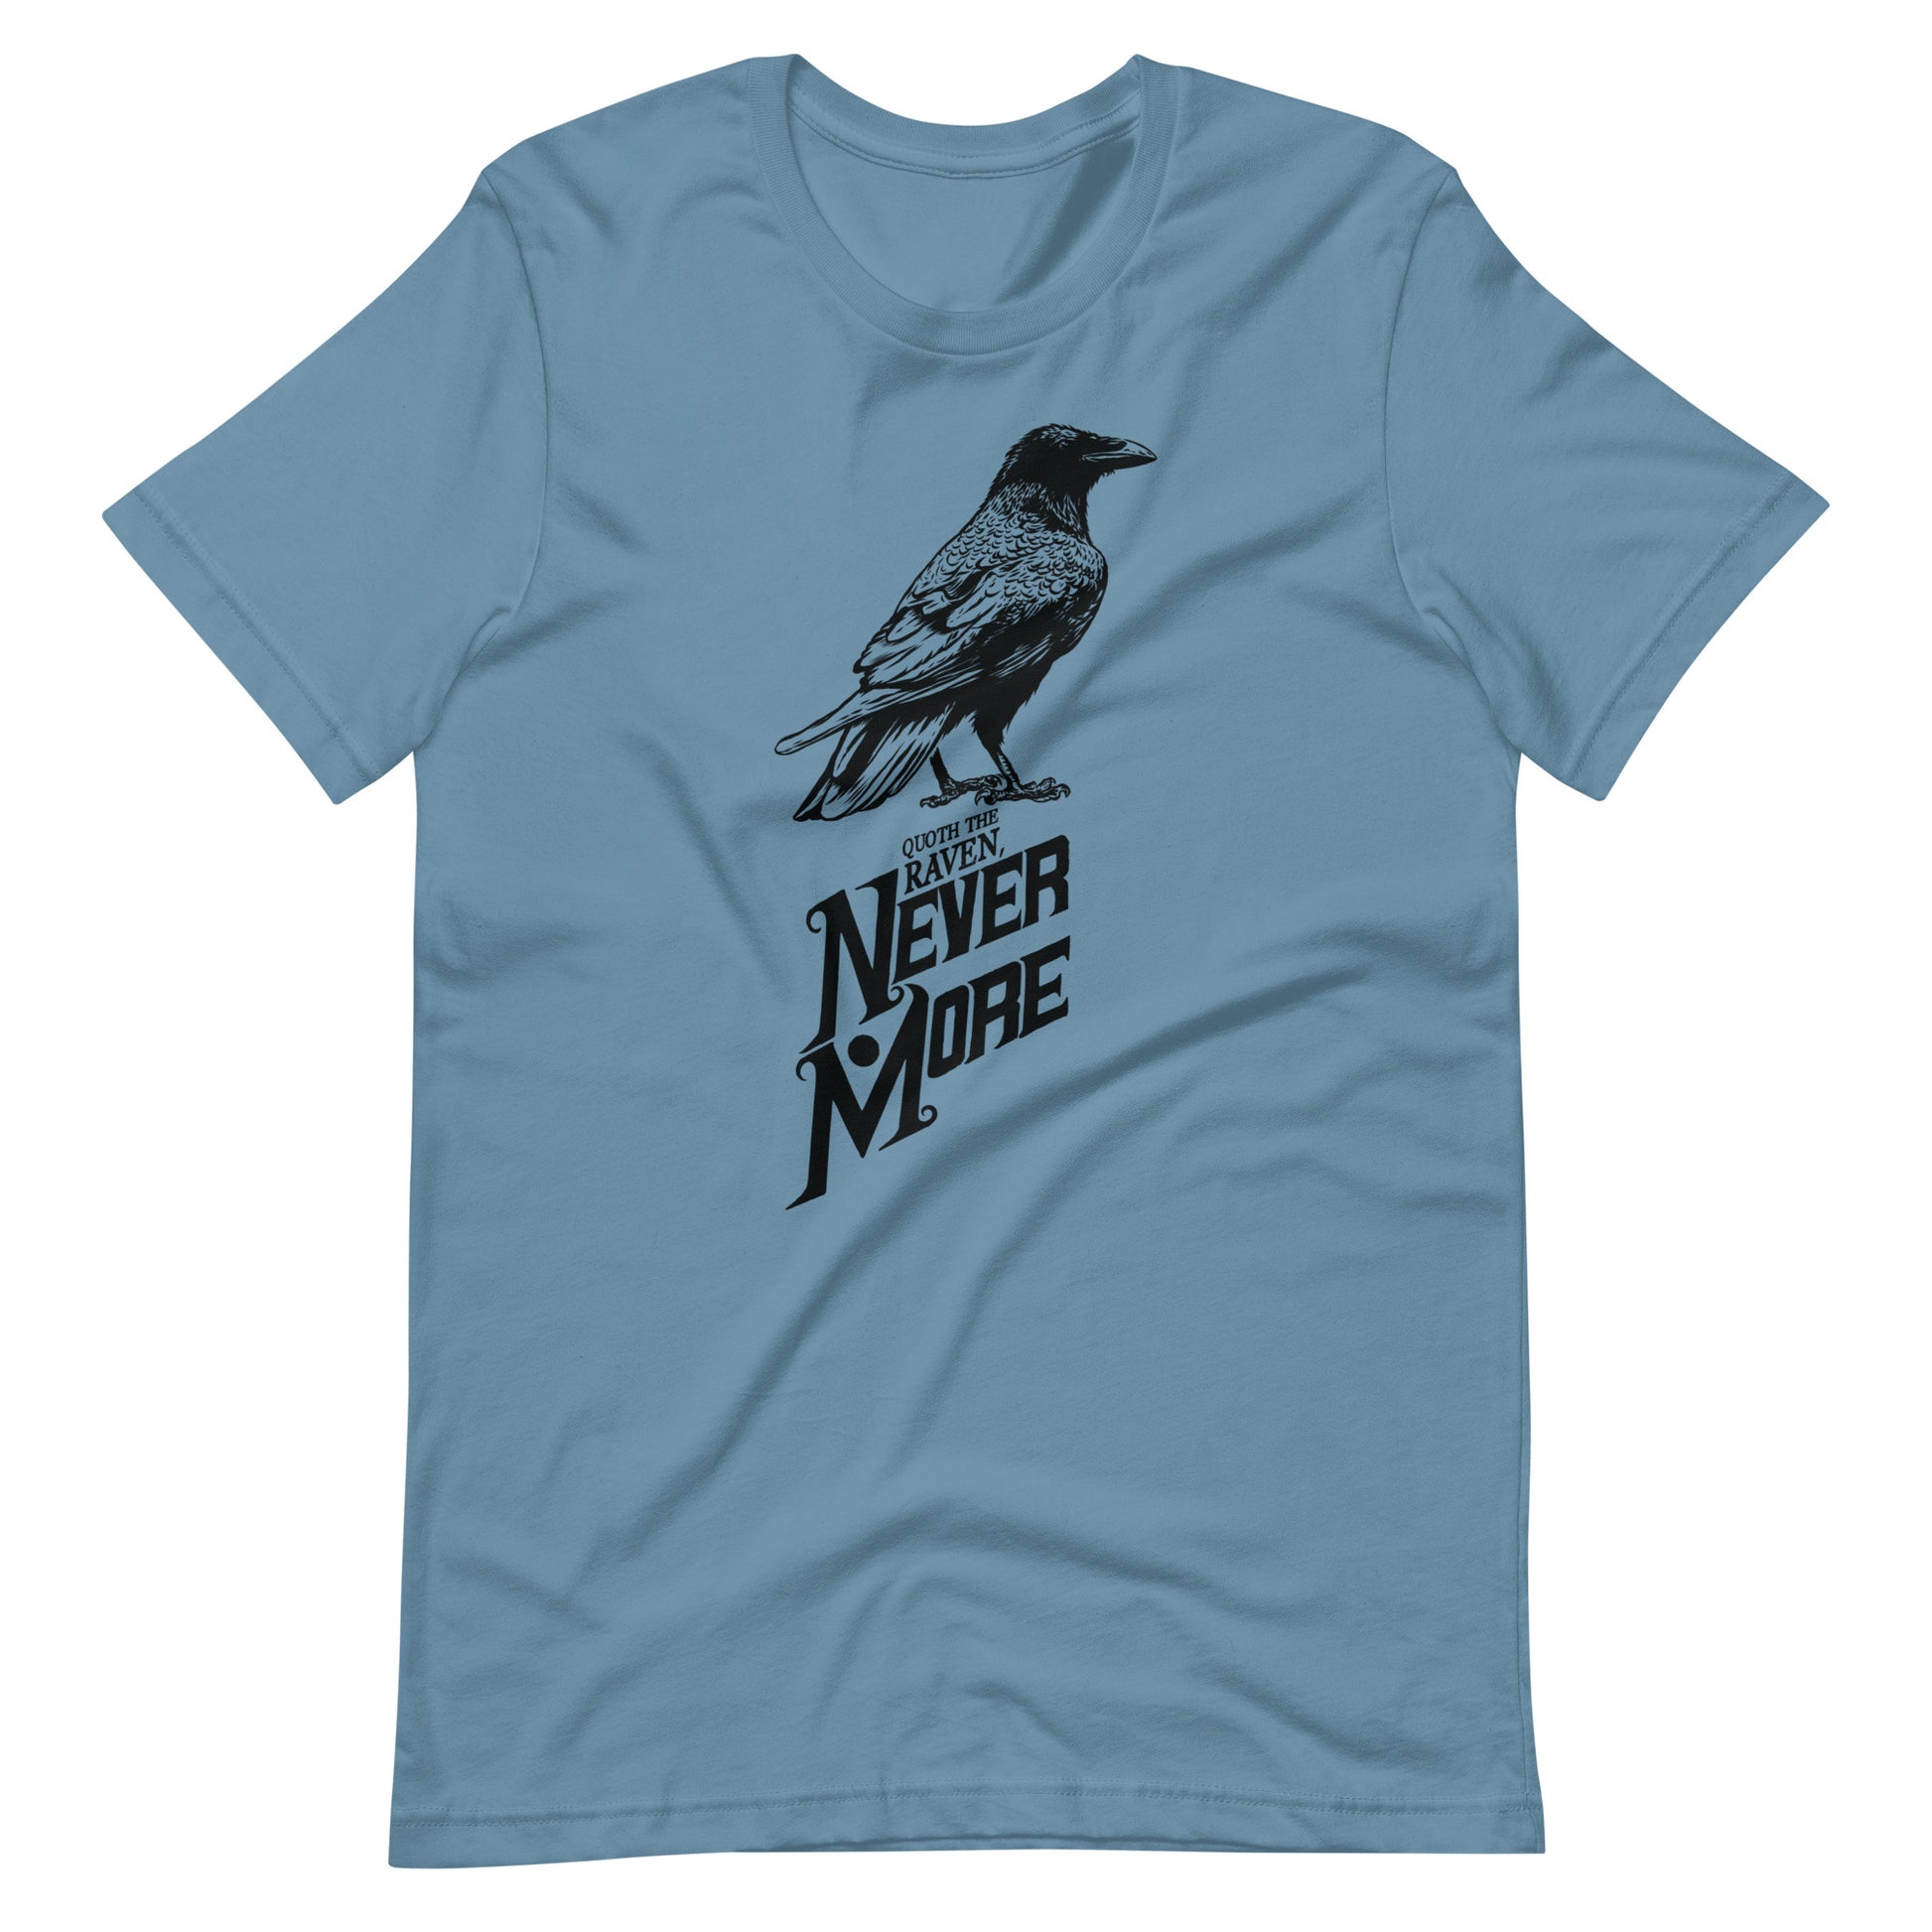 Quoth the Raven Nevermore - Men's t-shirt - Steel Blue Front